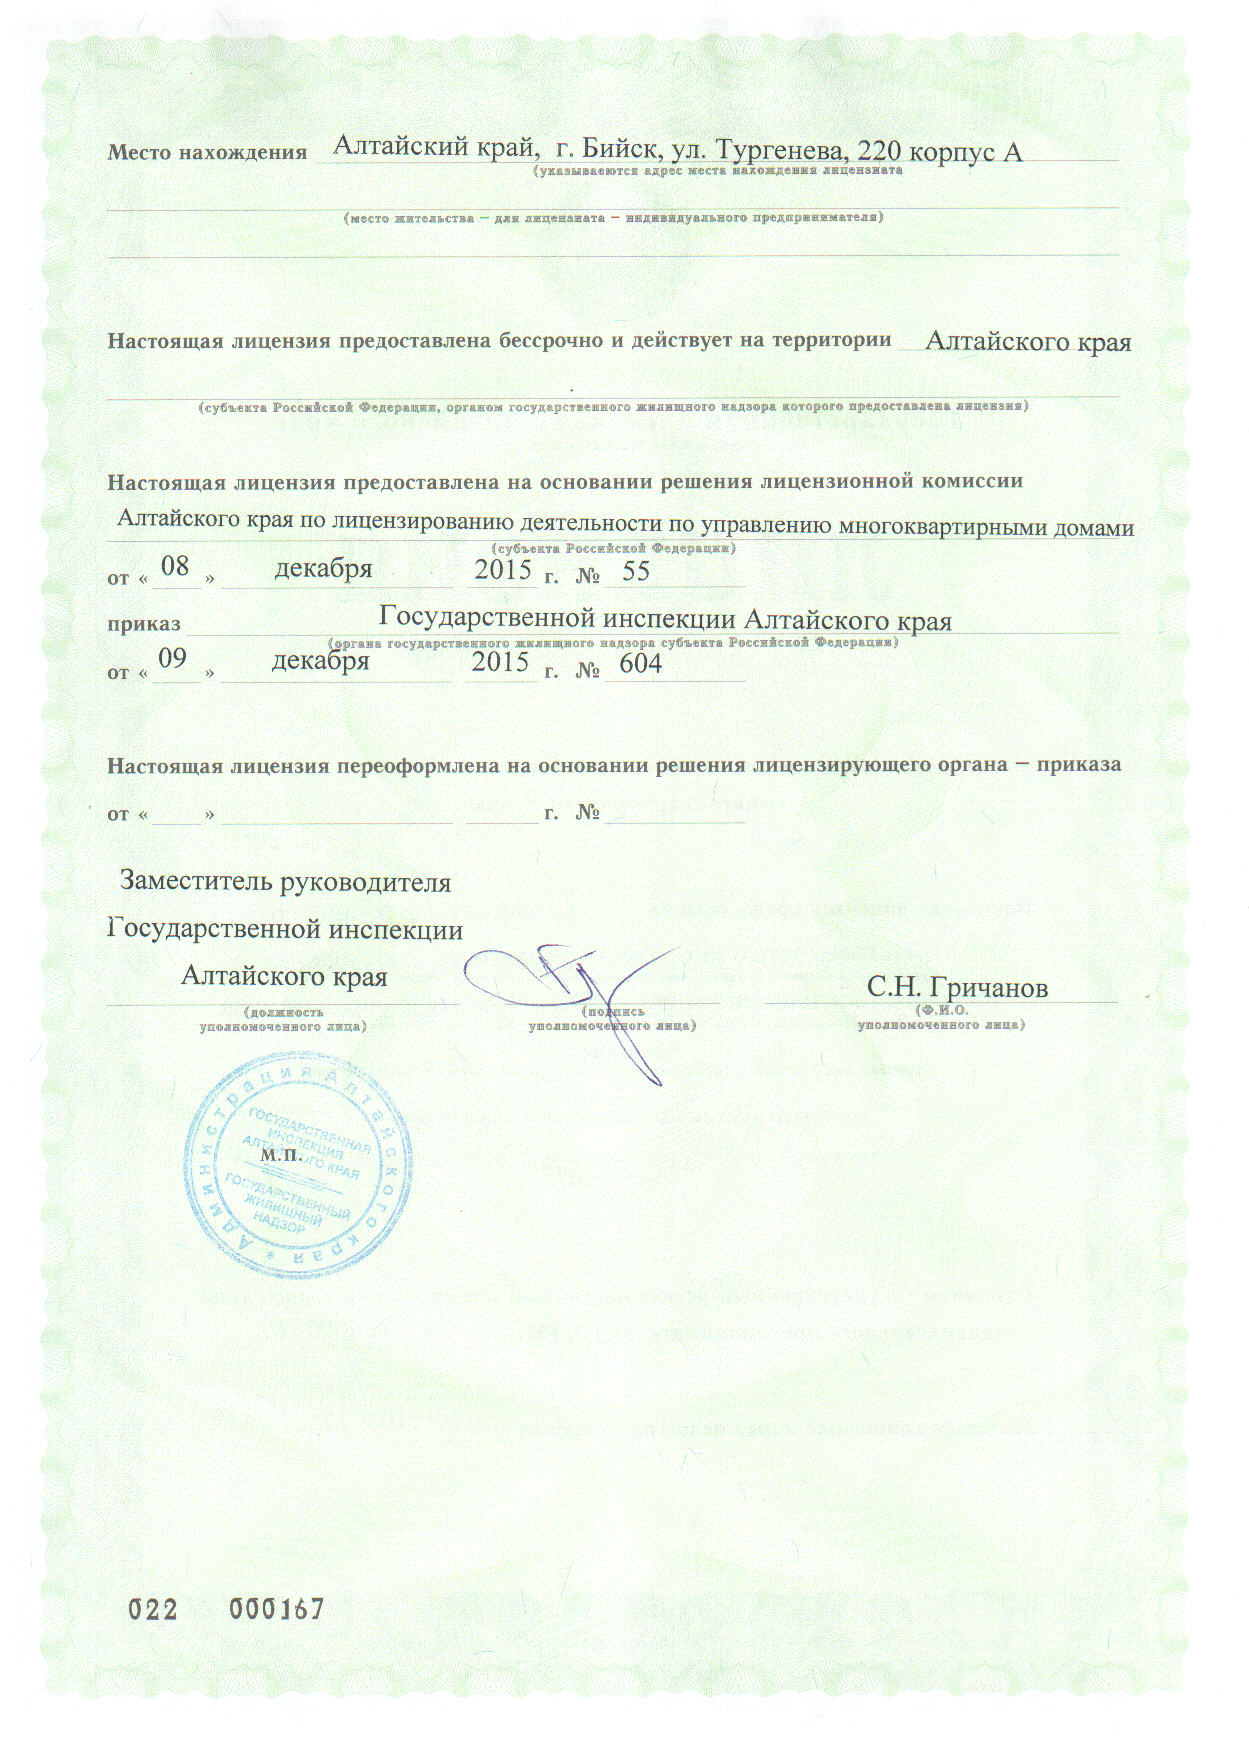 Лицензия на управление МКД №167 от 09.12.2015